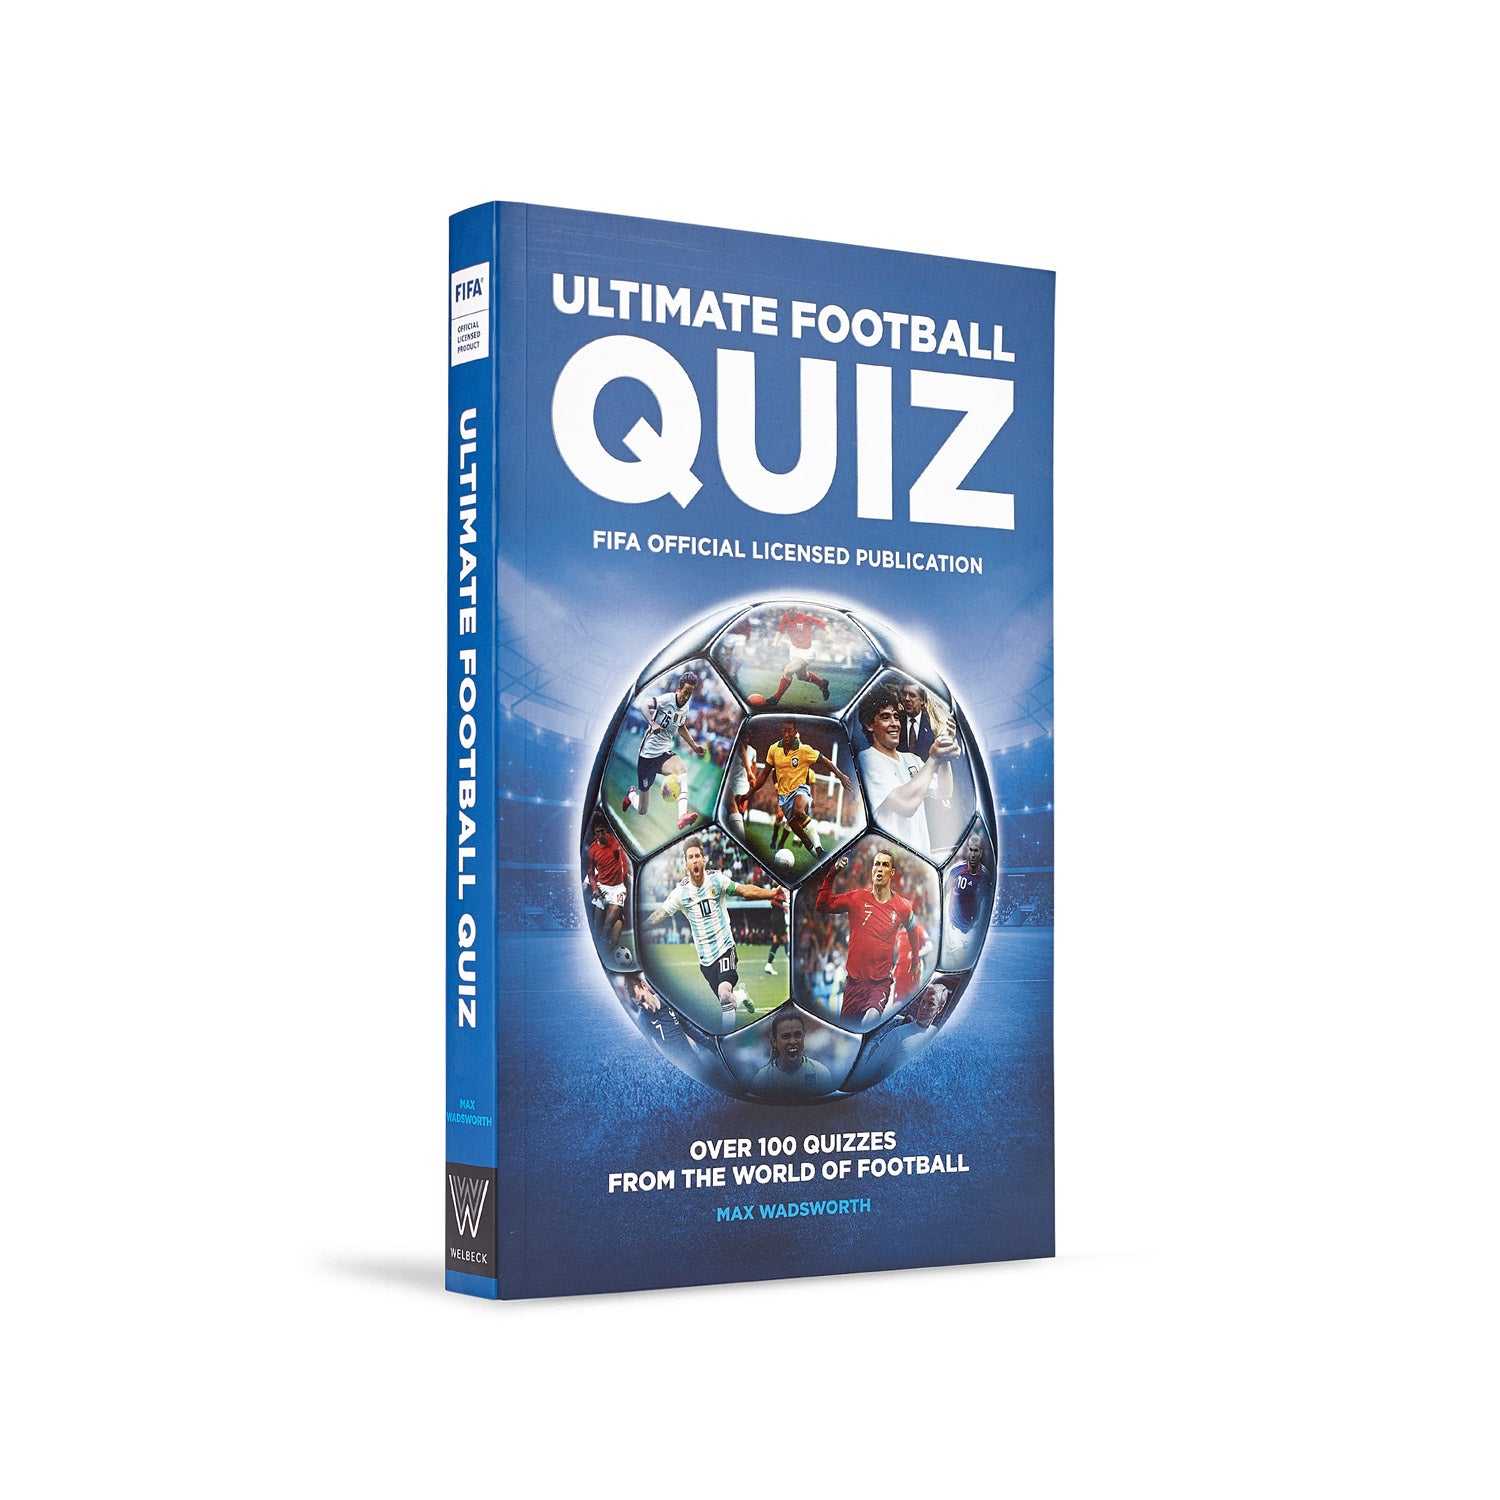 The FIFA Ultimate Football Quiz Book